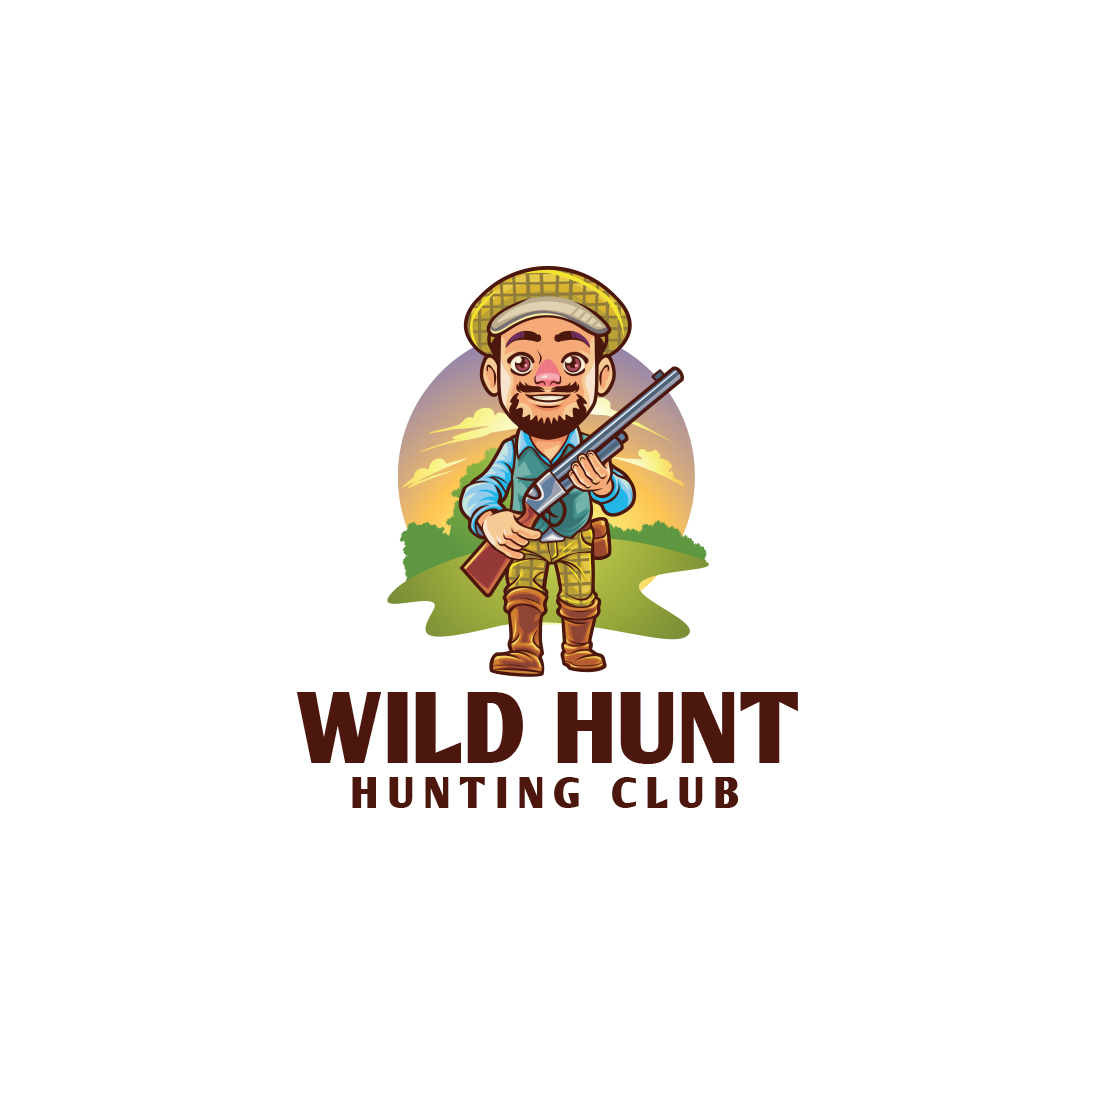 Hunt Club Logo Design cover image.